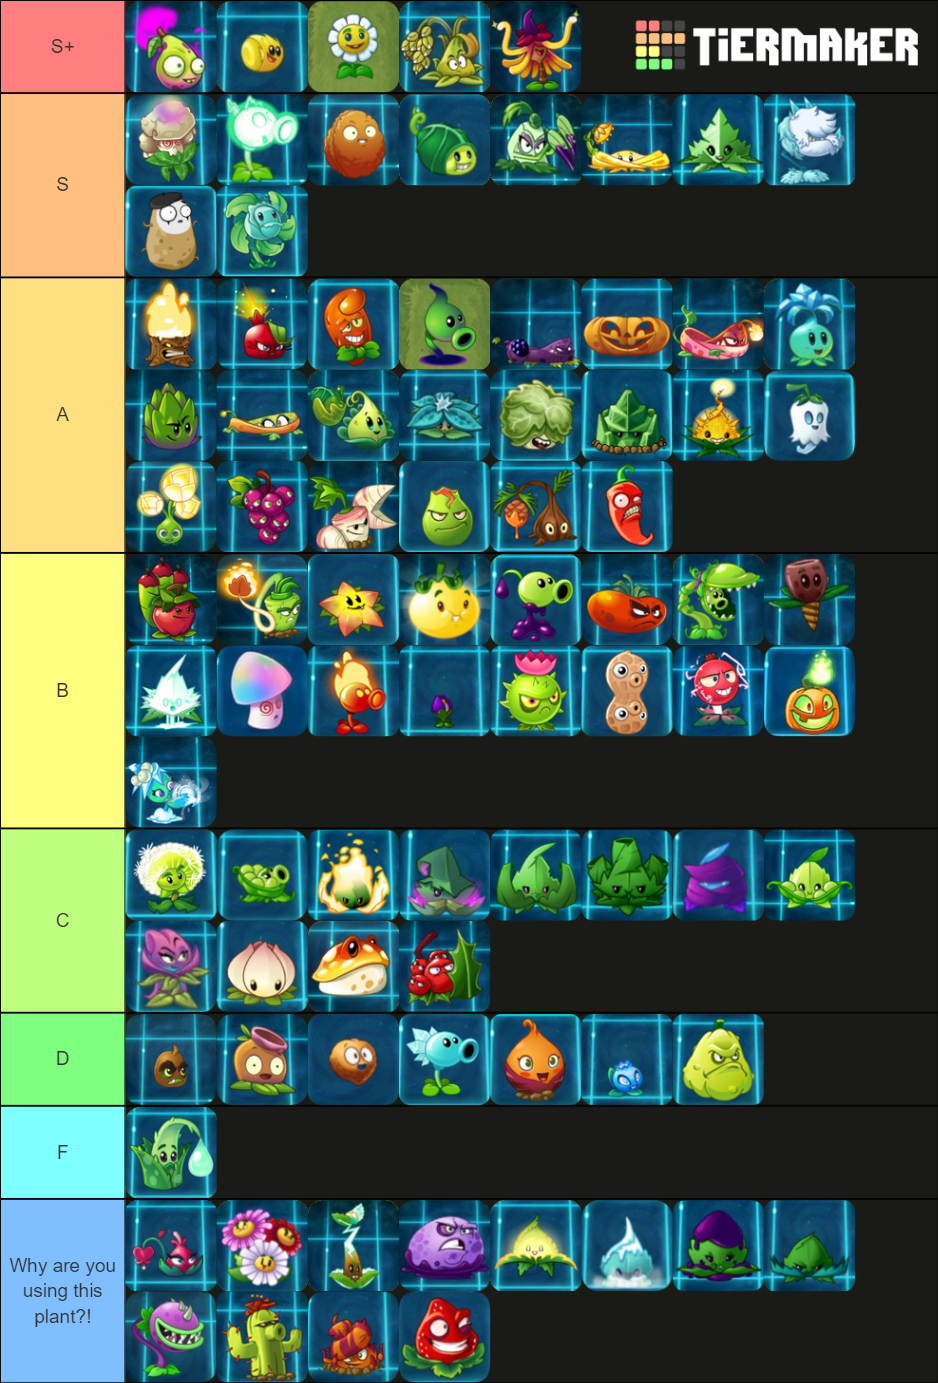 PvZ2 Plant Tier List based on designs